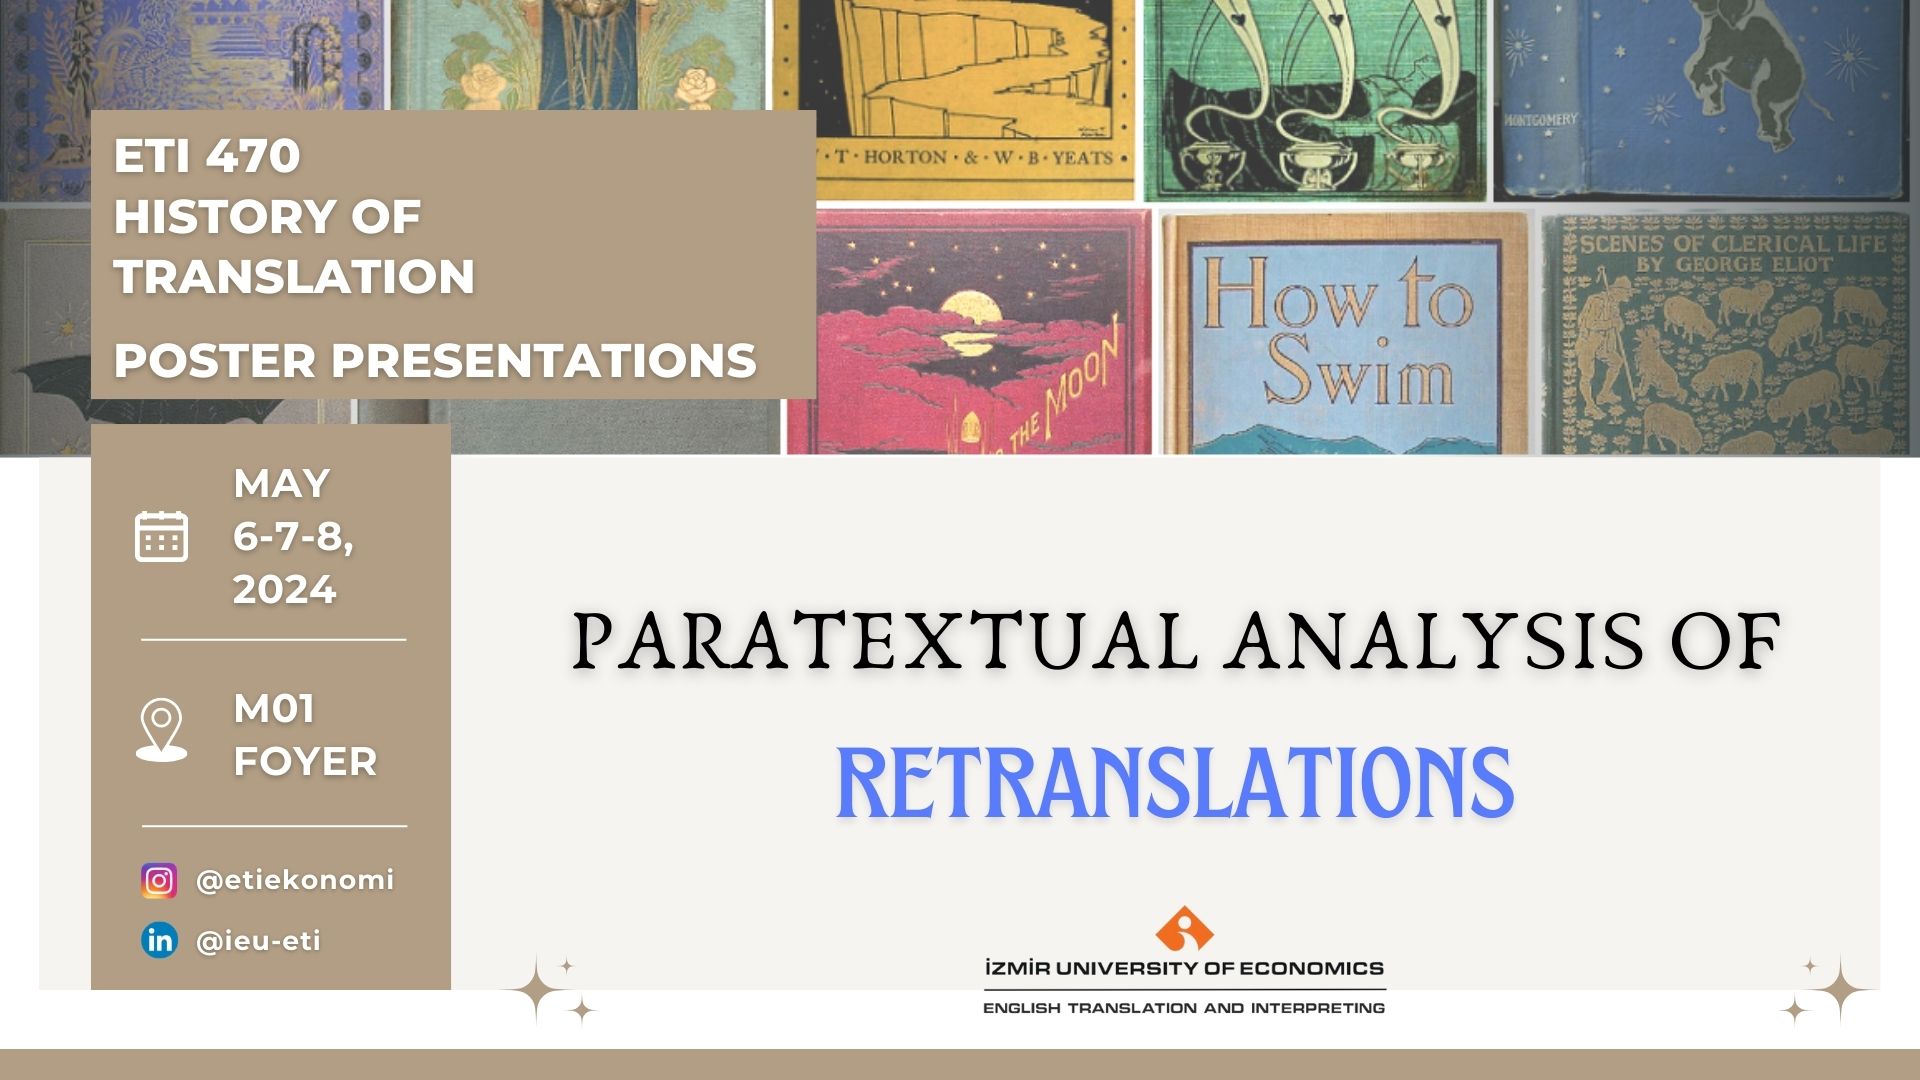 ETI 470 Translation History, Poster Exhibition: "Paratextual Analysis of Retranslations"